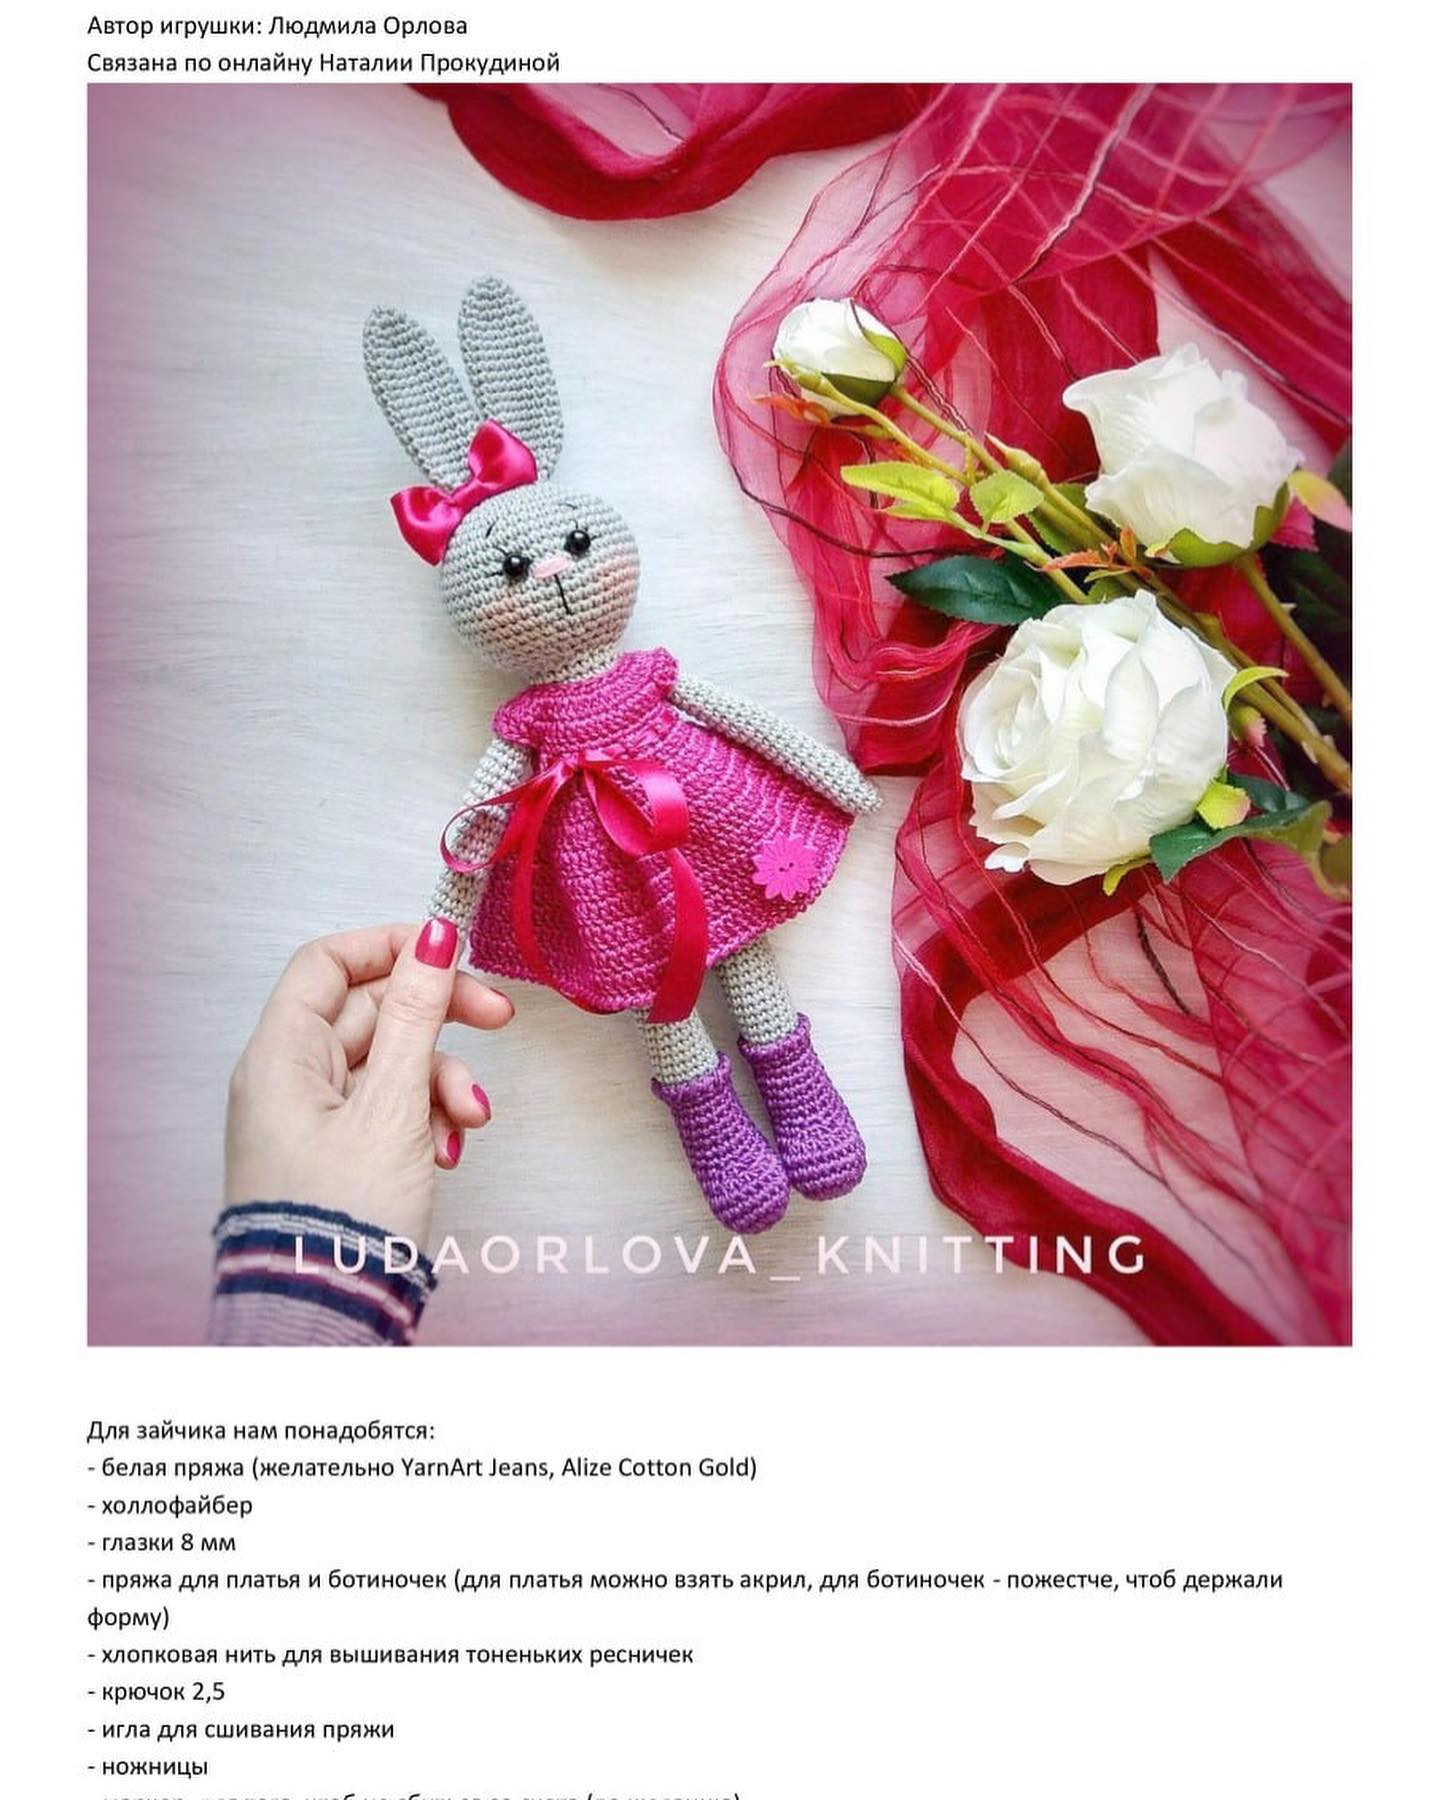 Gray rabbit, wearing pink dress, pink bow.free crochet pattern